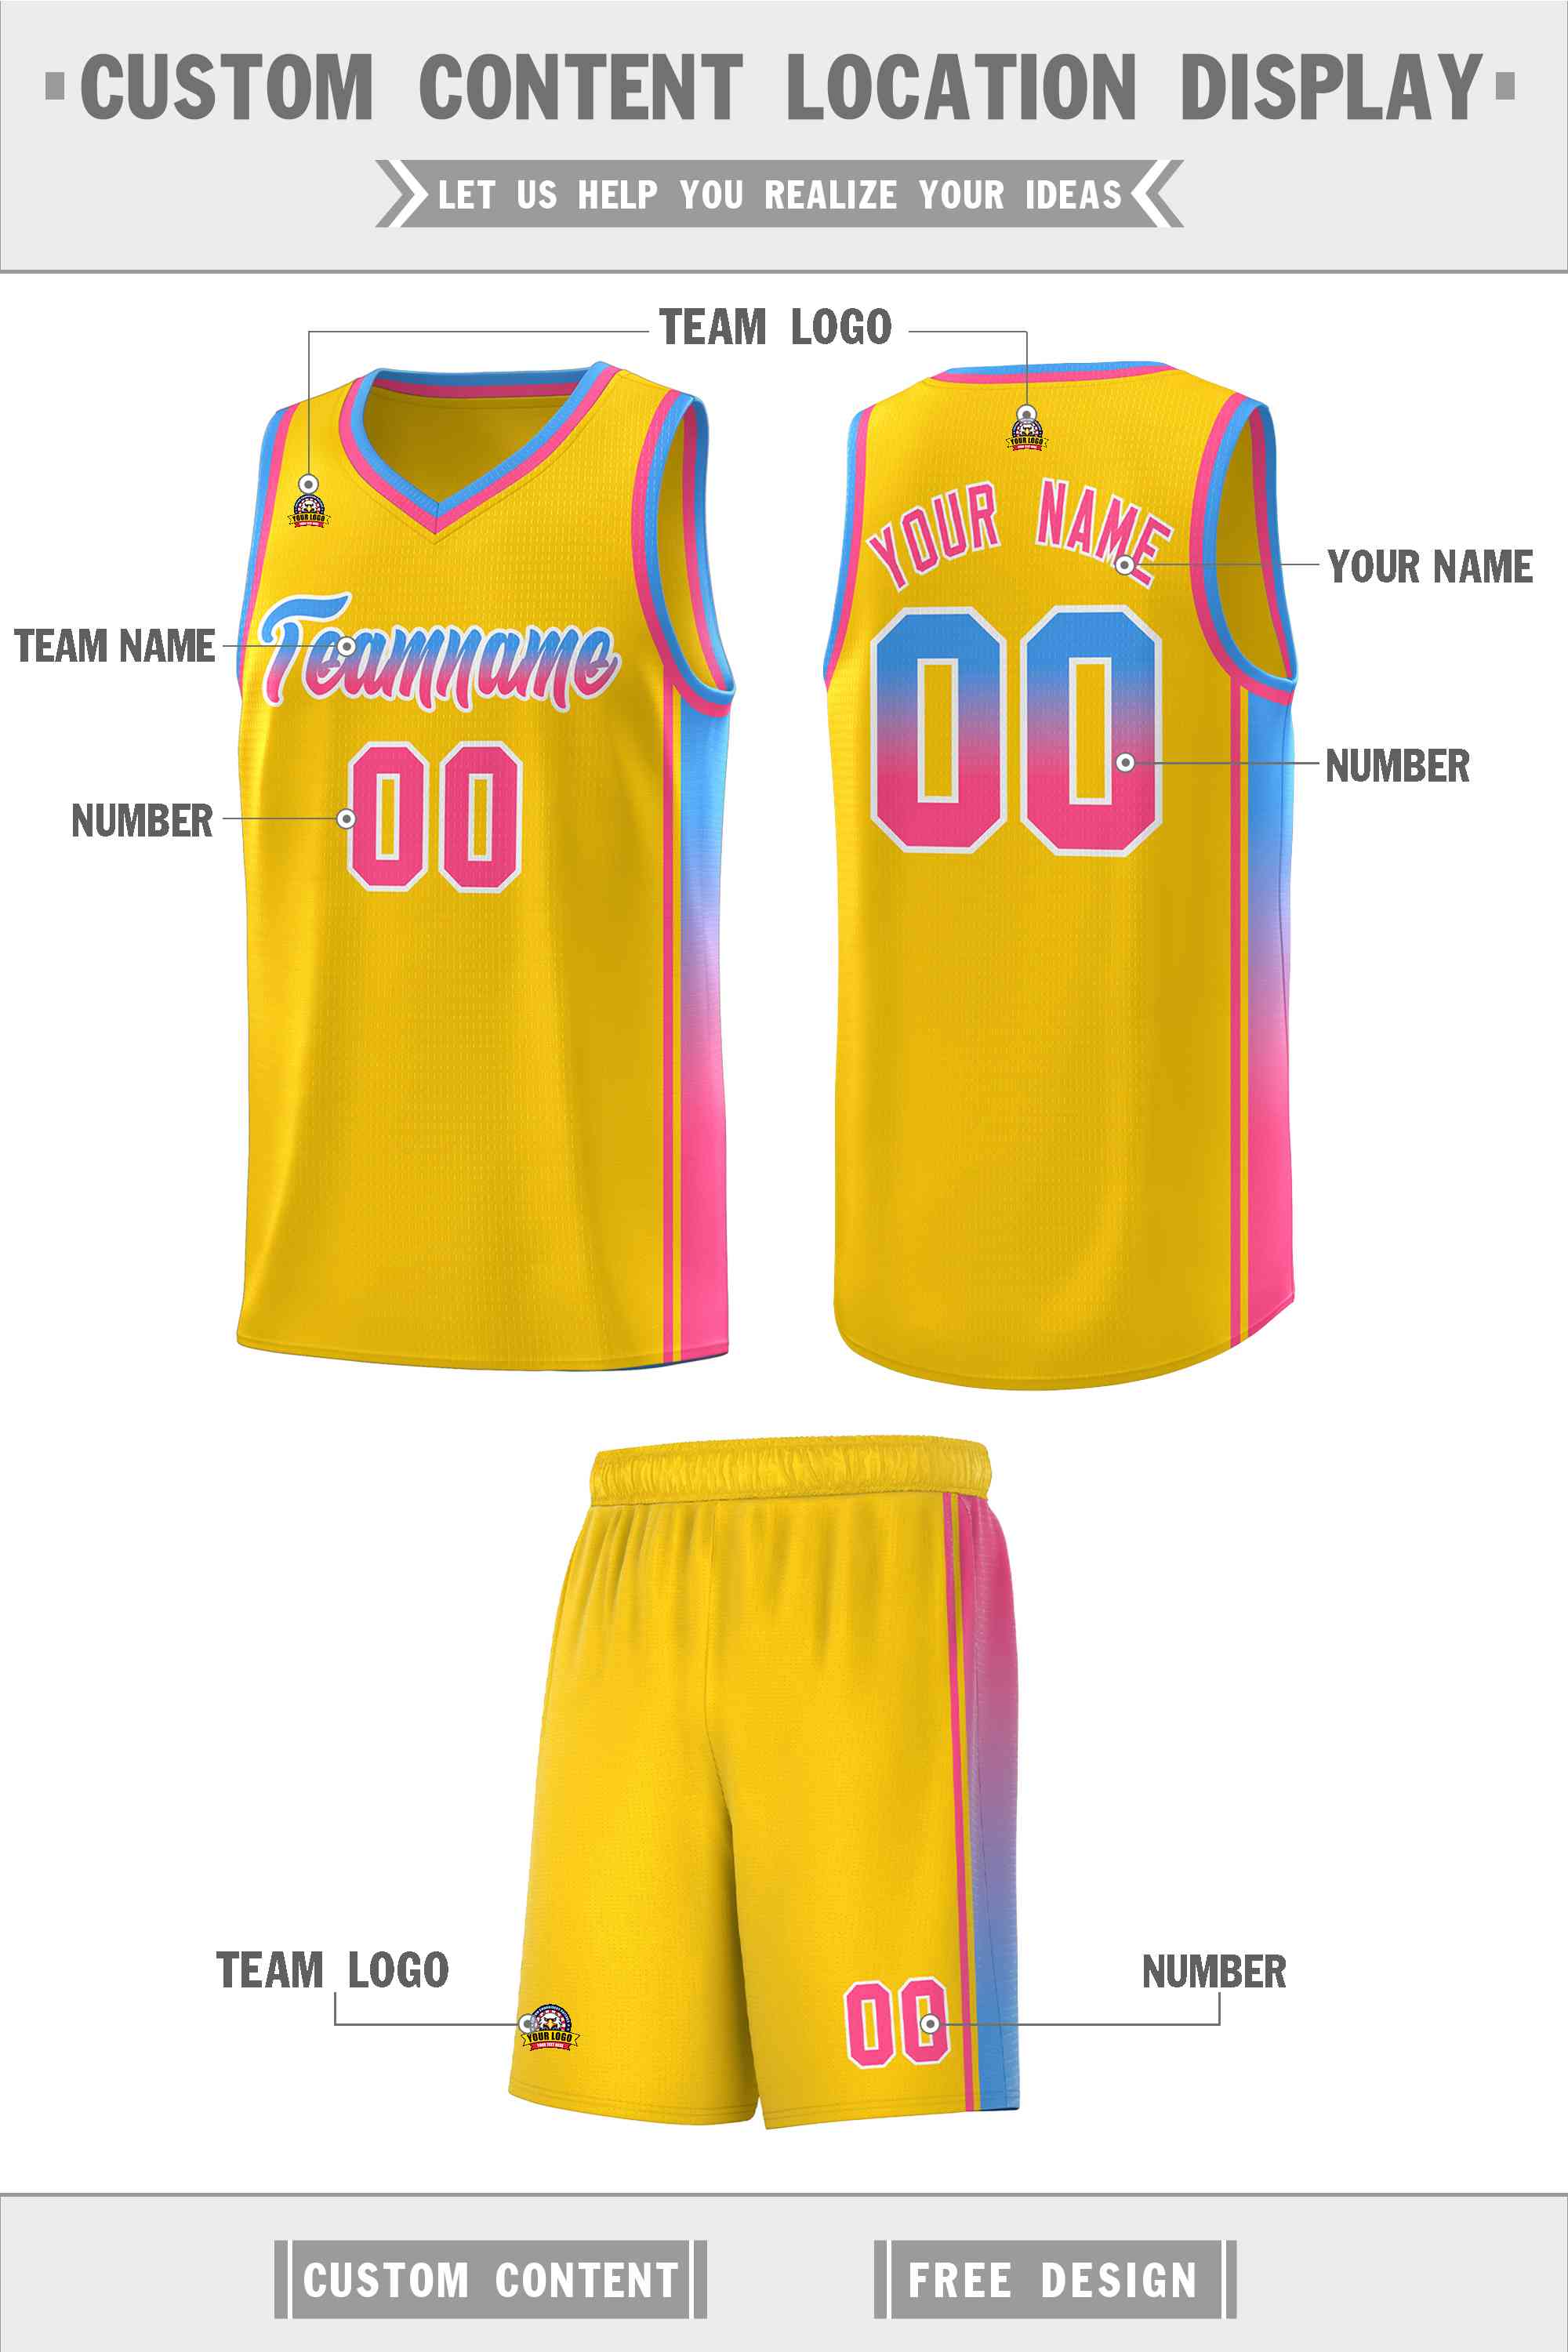 Custom Gold Light Blue-Pink Gradient Fashion Sports Uniform Basketball Jersey